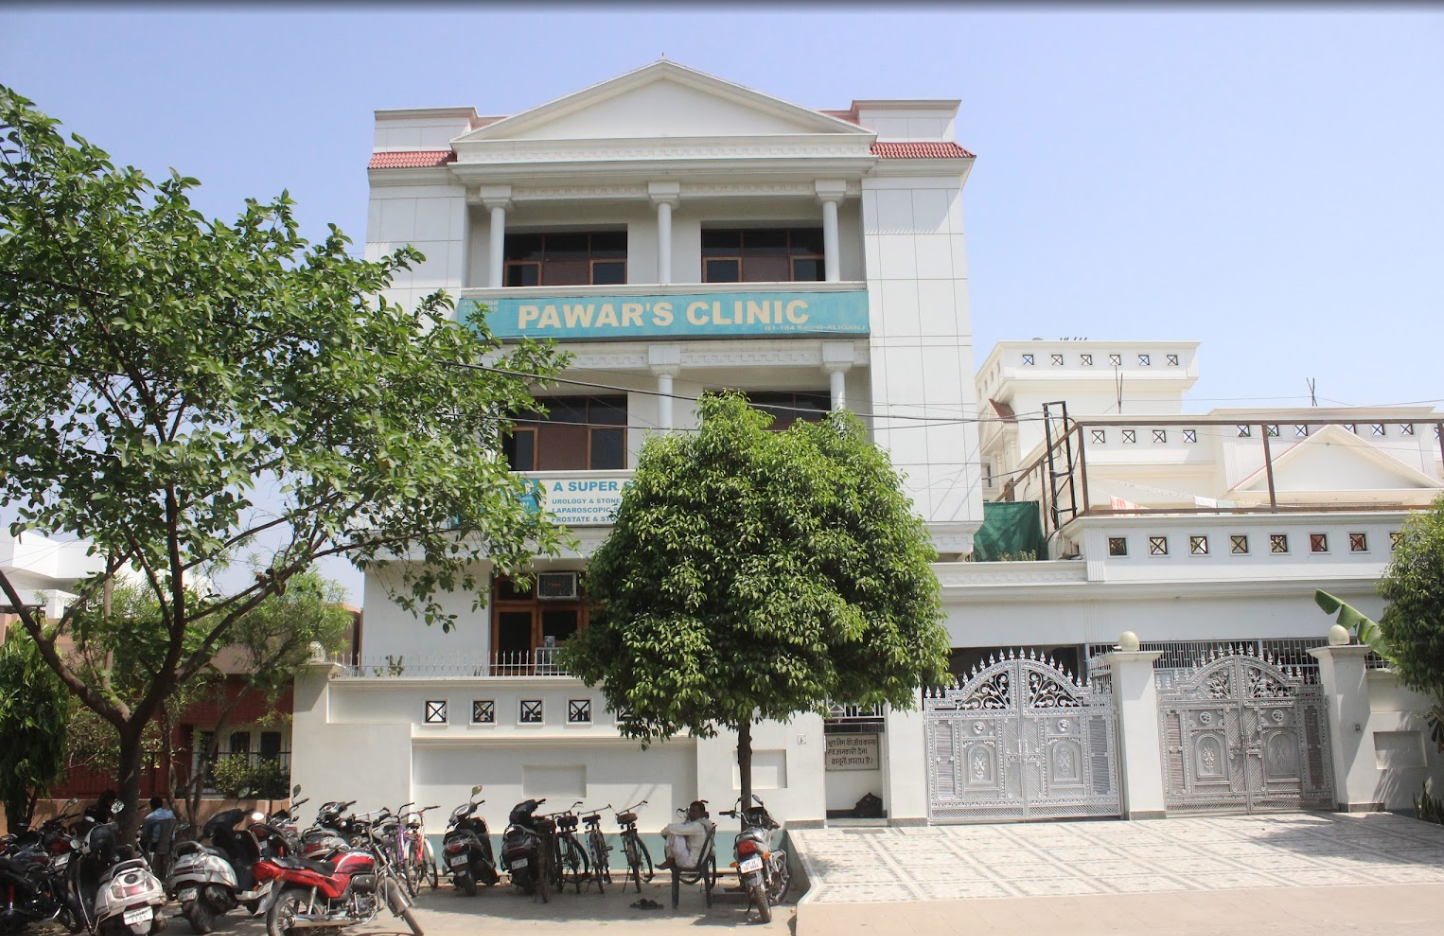 Pawar's Clinic